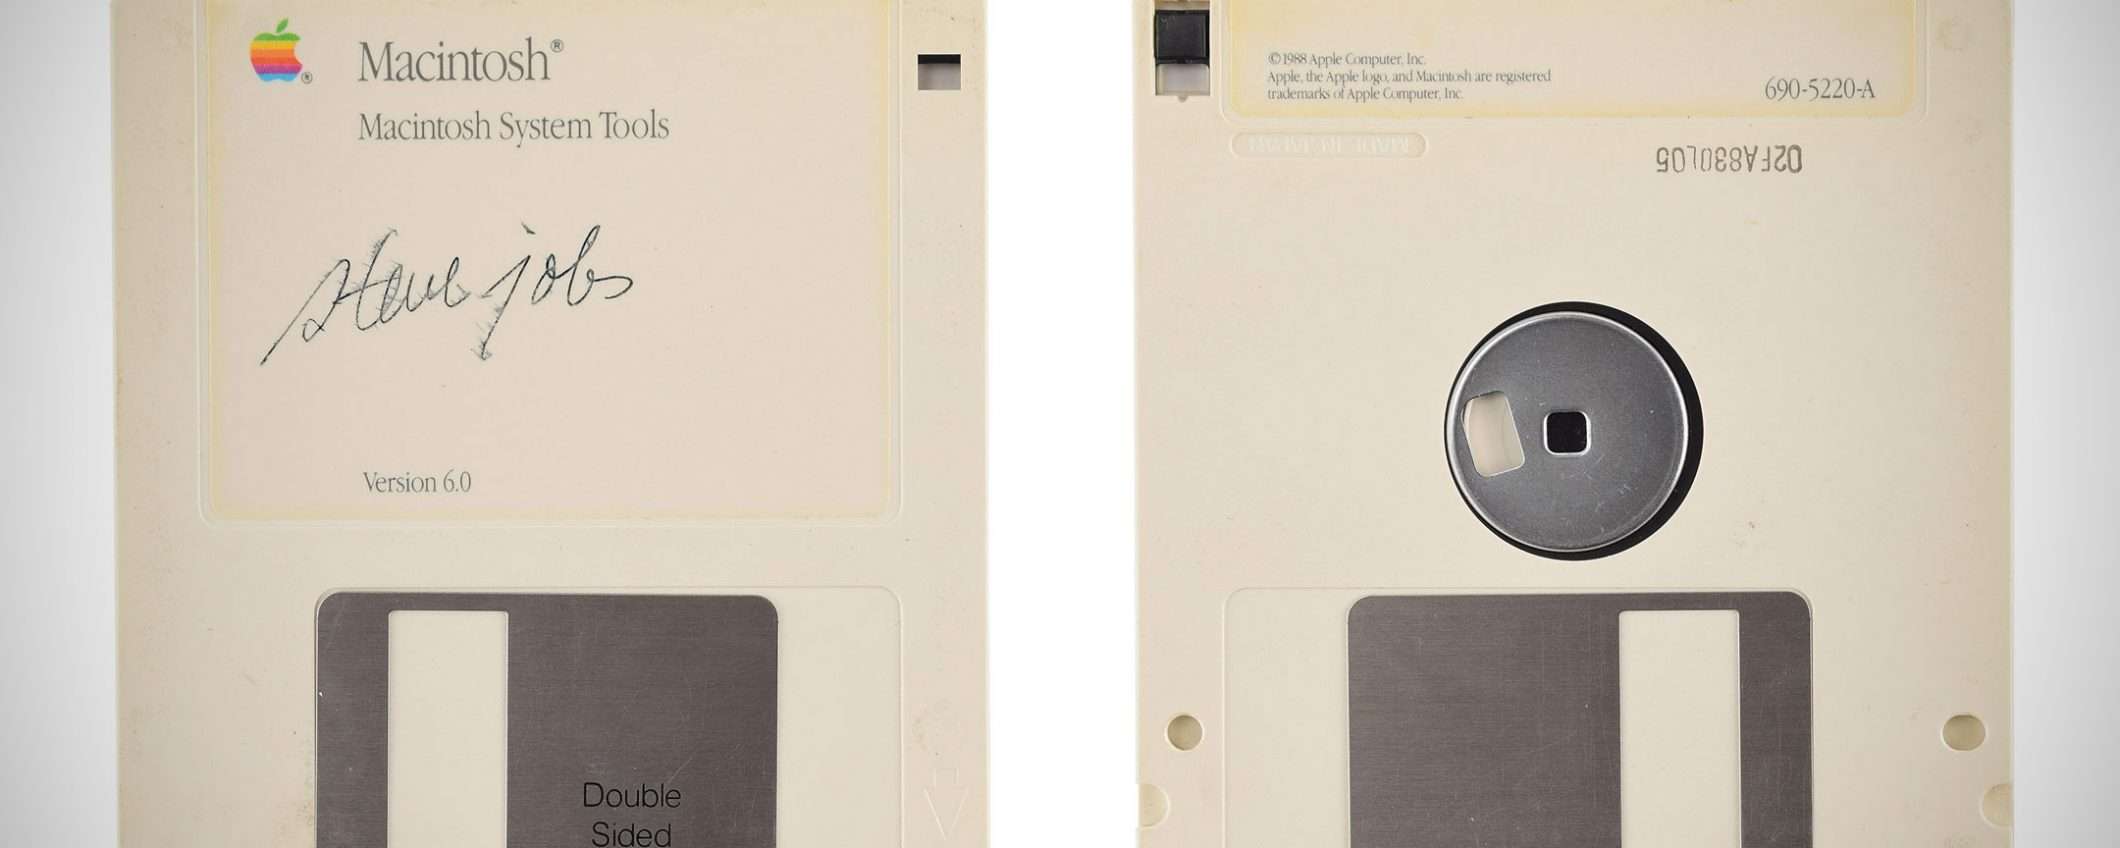 84000 dollari per il floppy firmato da Steve Jobs